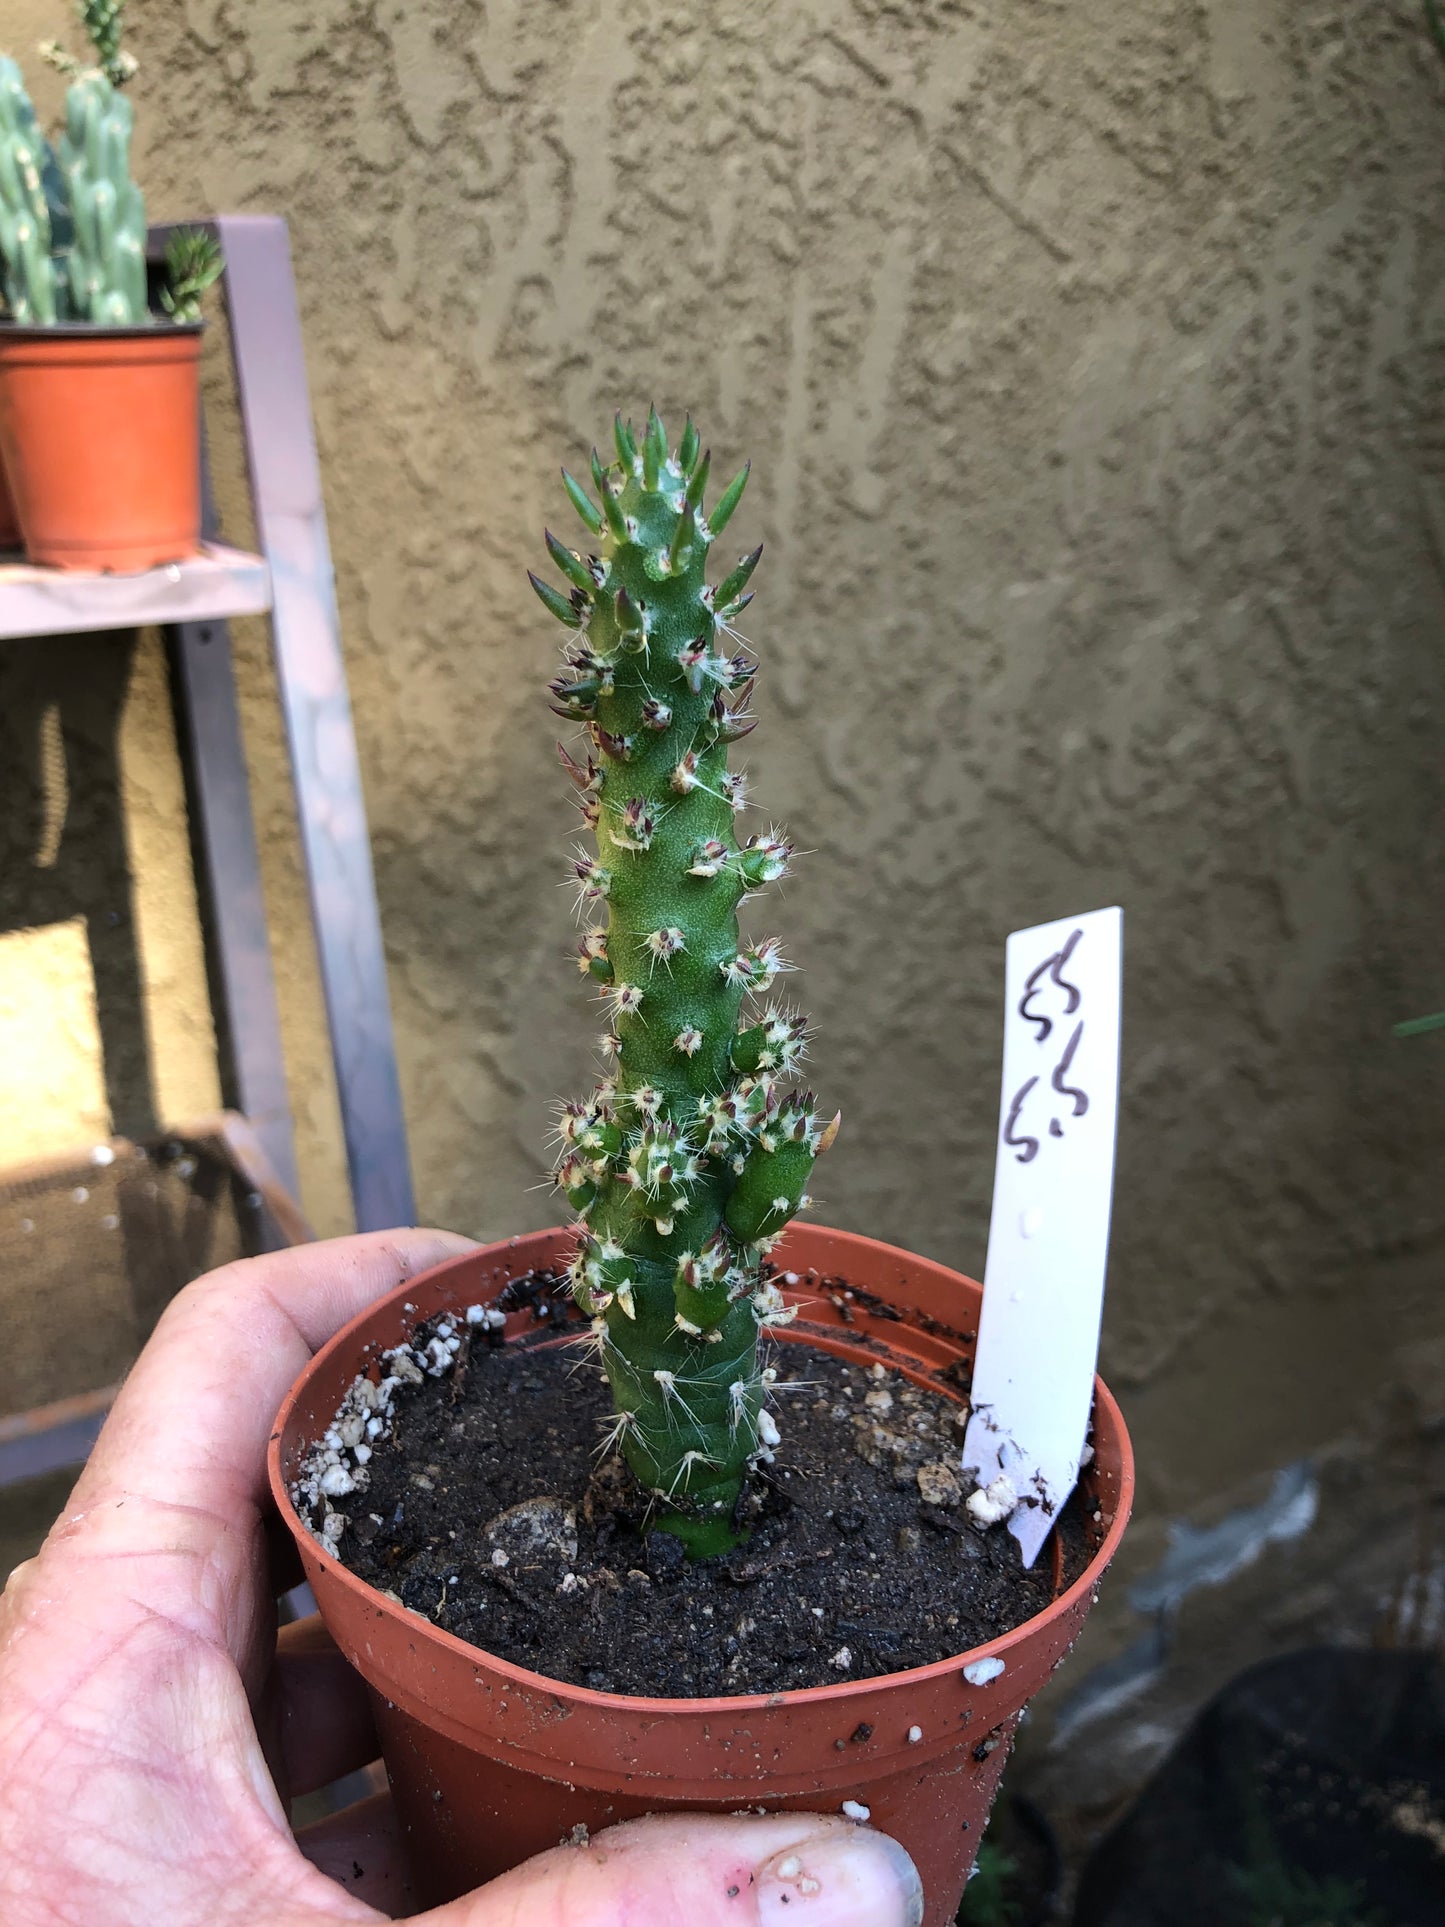 Austrocylindropuntia Cactus Gumbi Mini Eve's Needle 5.5"Tall #55W